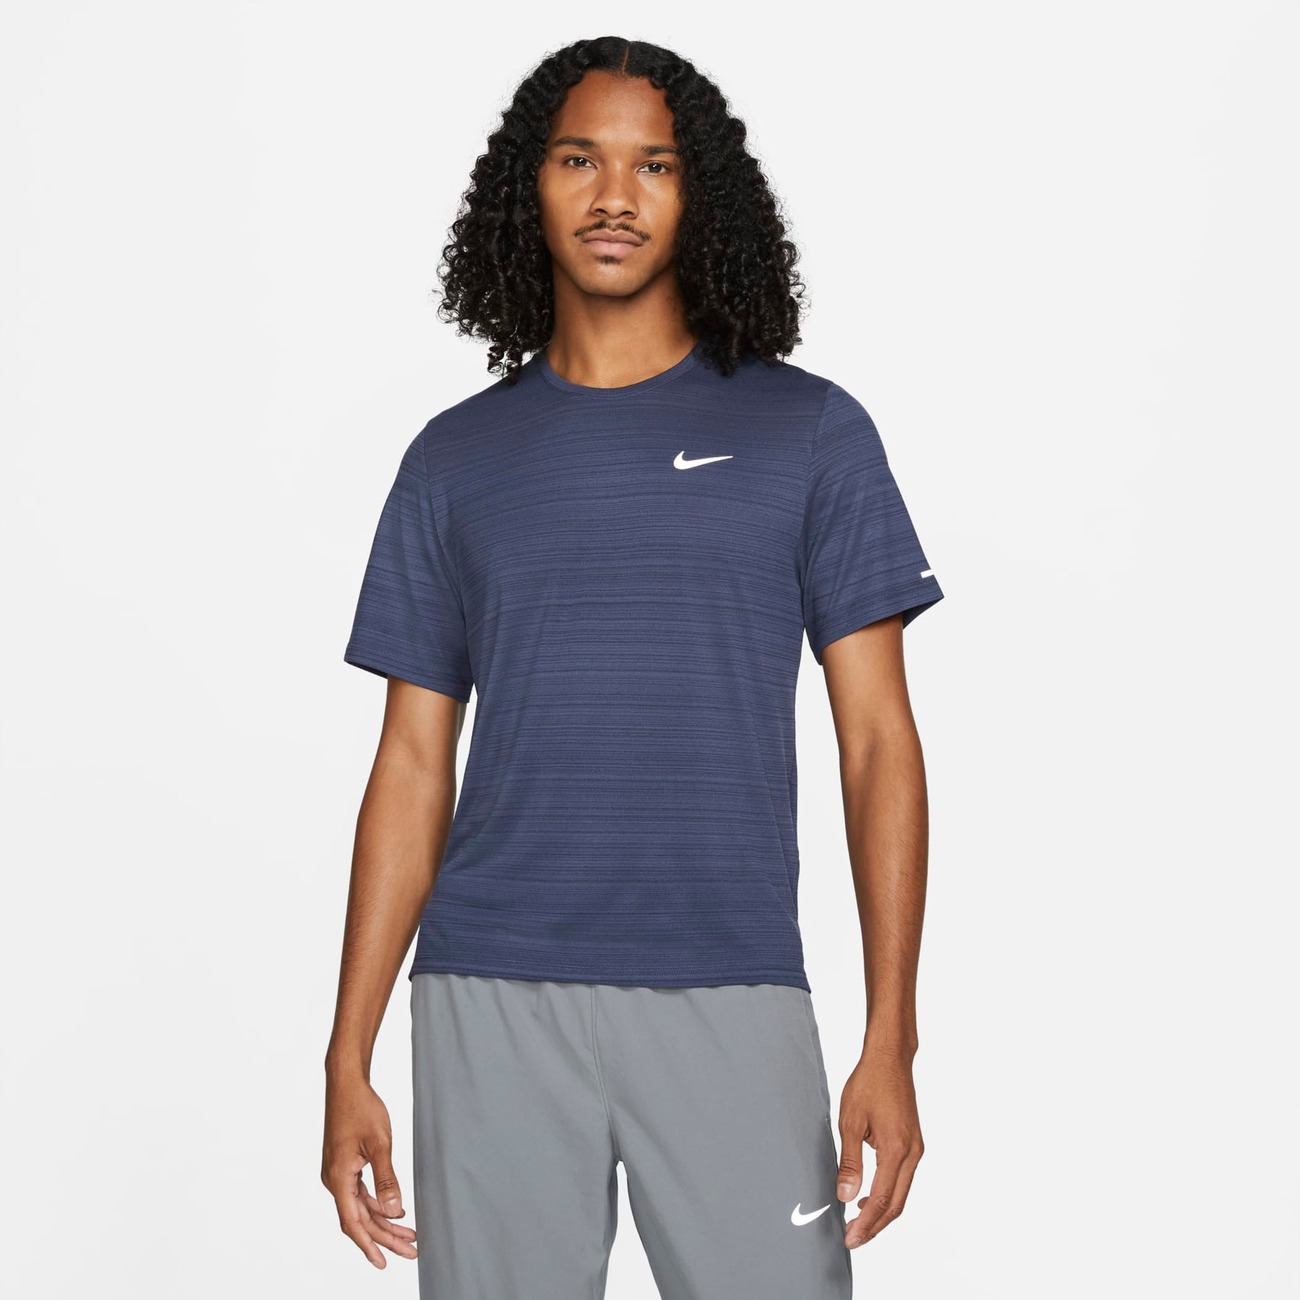 Oferta de Camiseta Nike Dri-FIT Miler Masculina - Nike - Just Do It